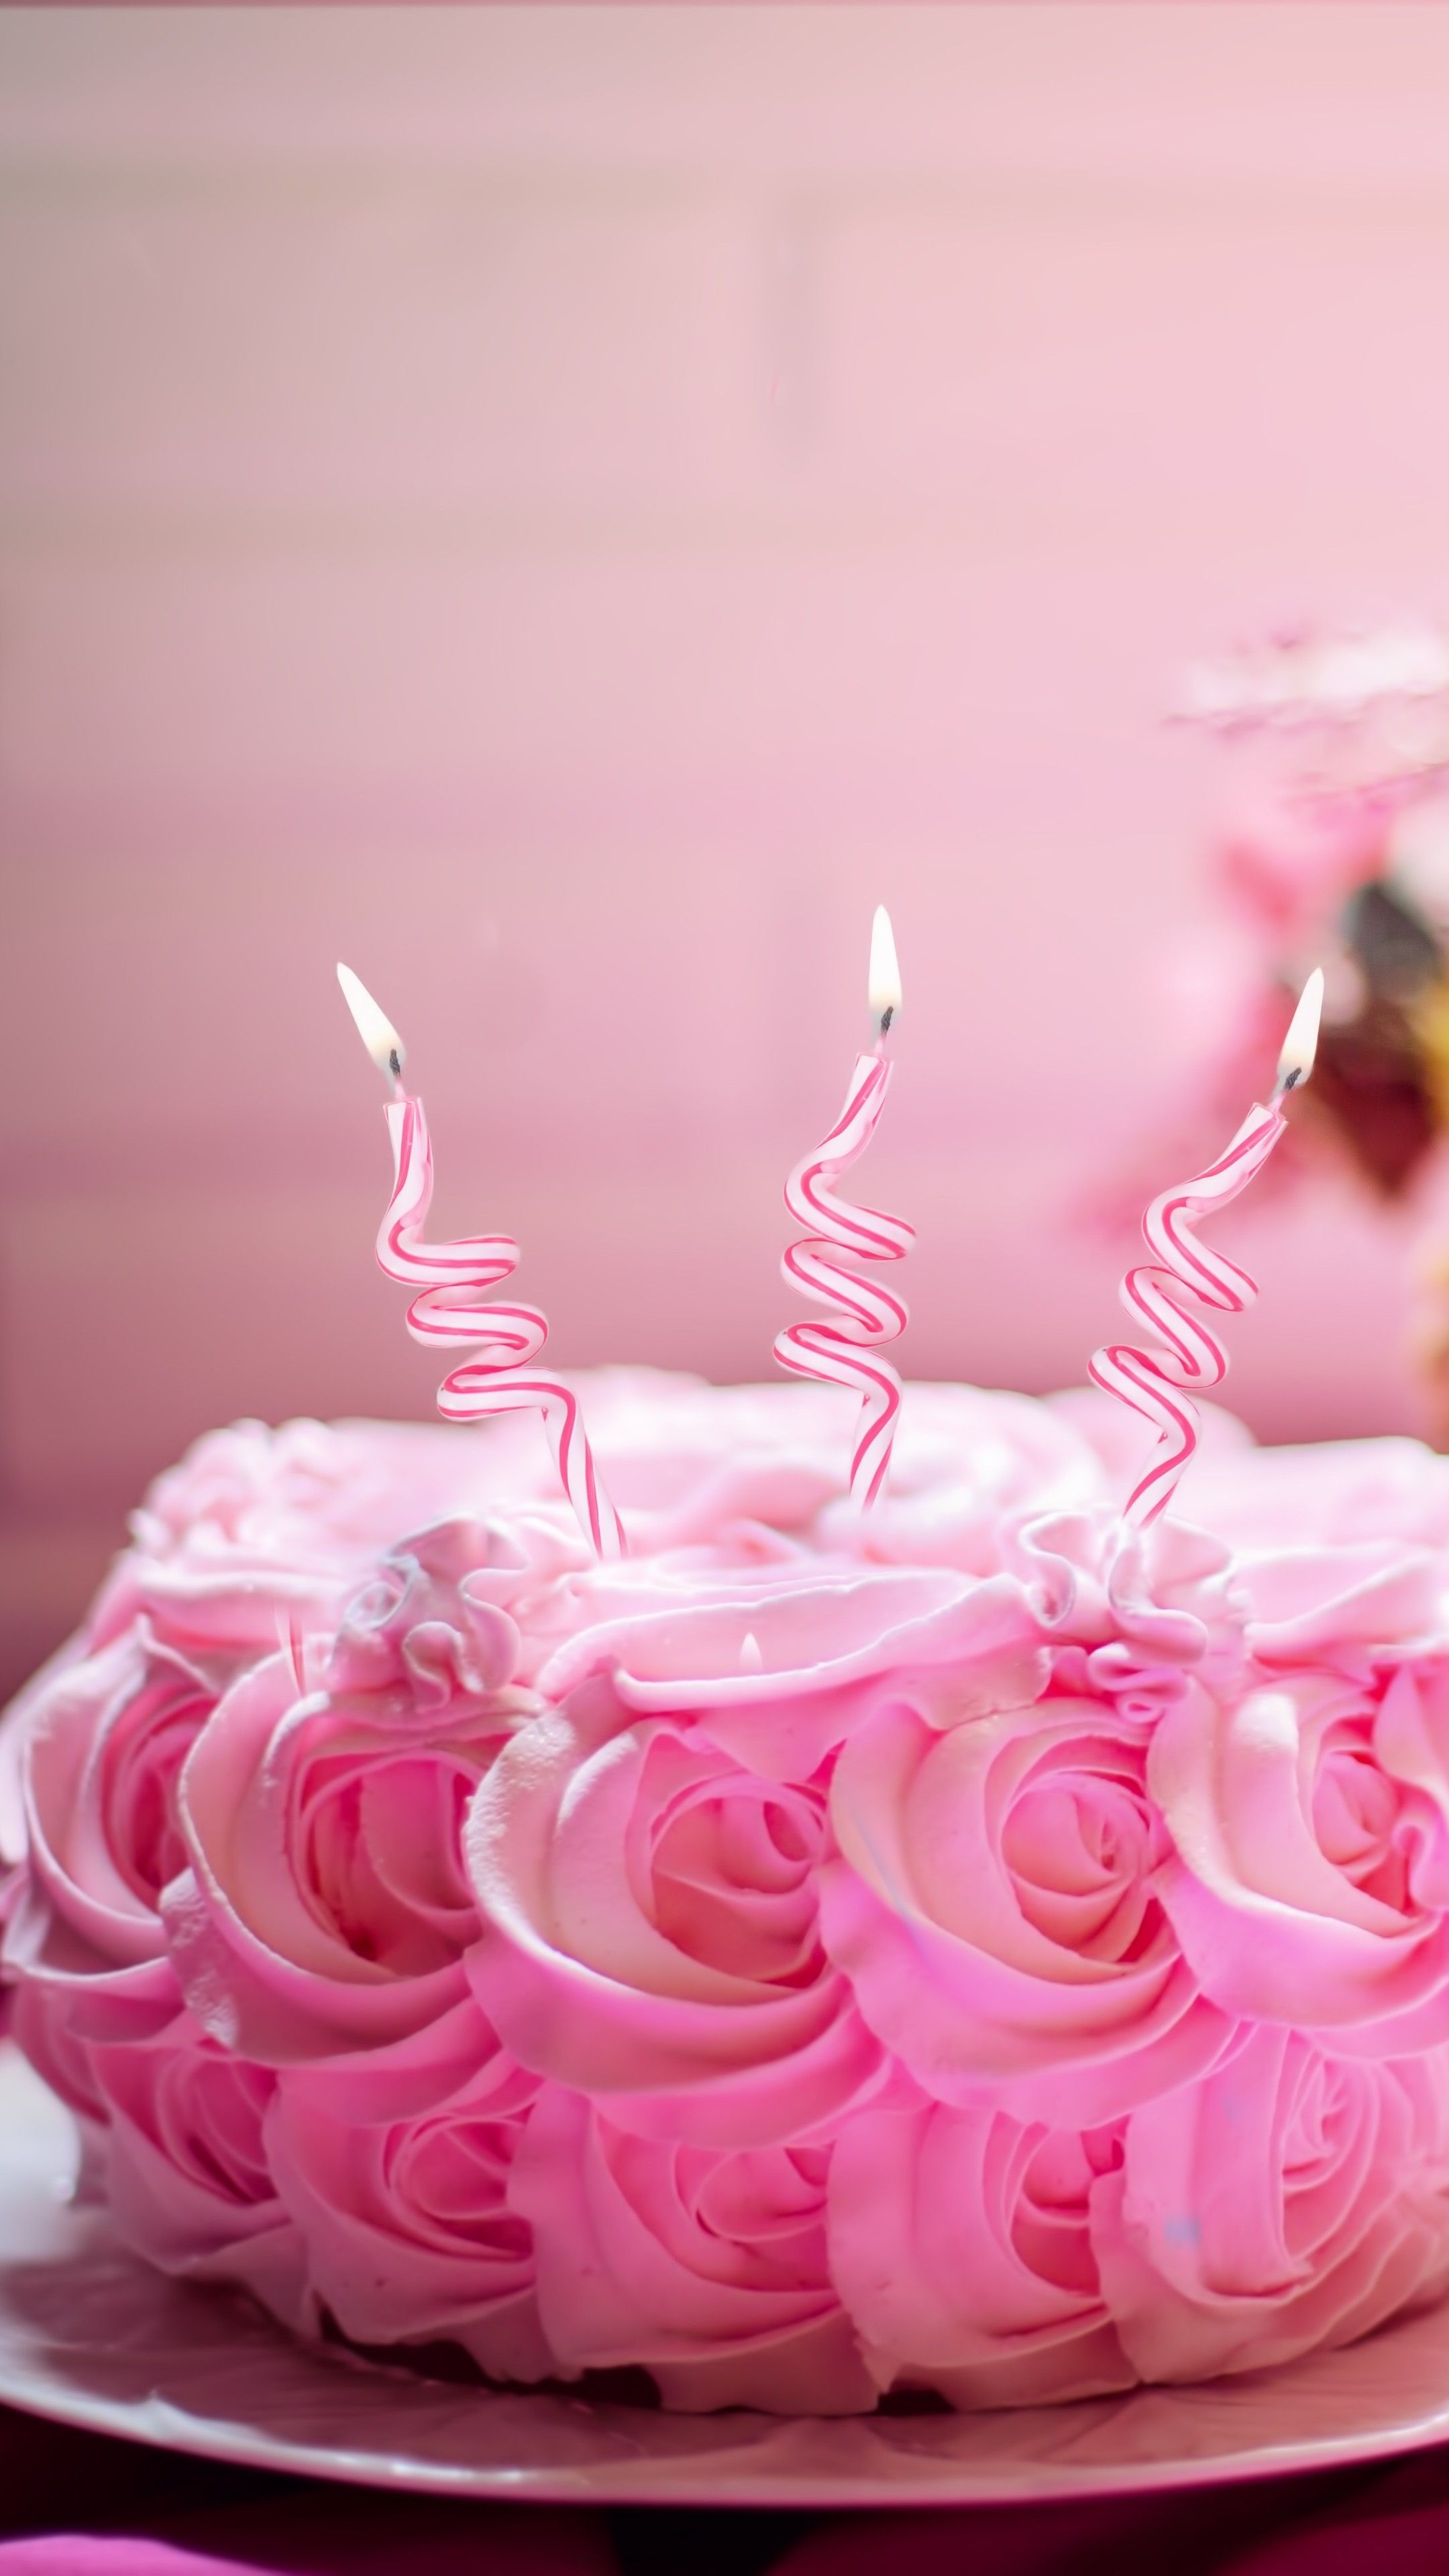 Wallpaper birthday cake, receipt, pink, 5k, Food